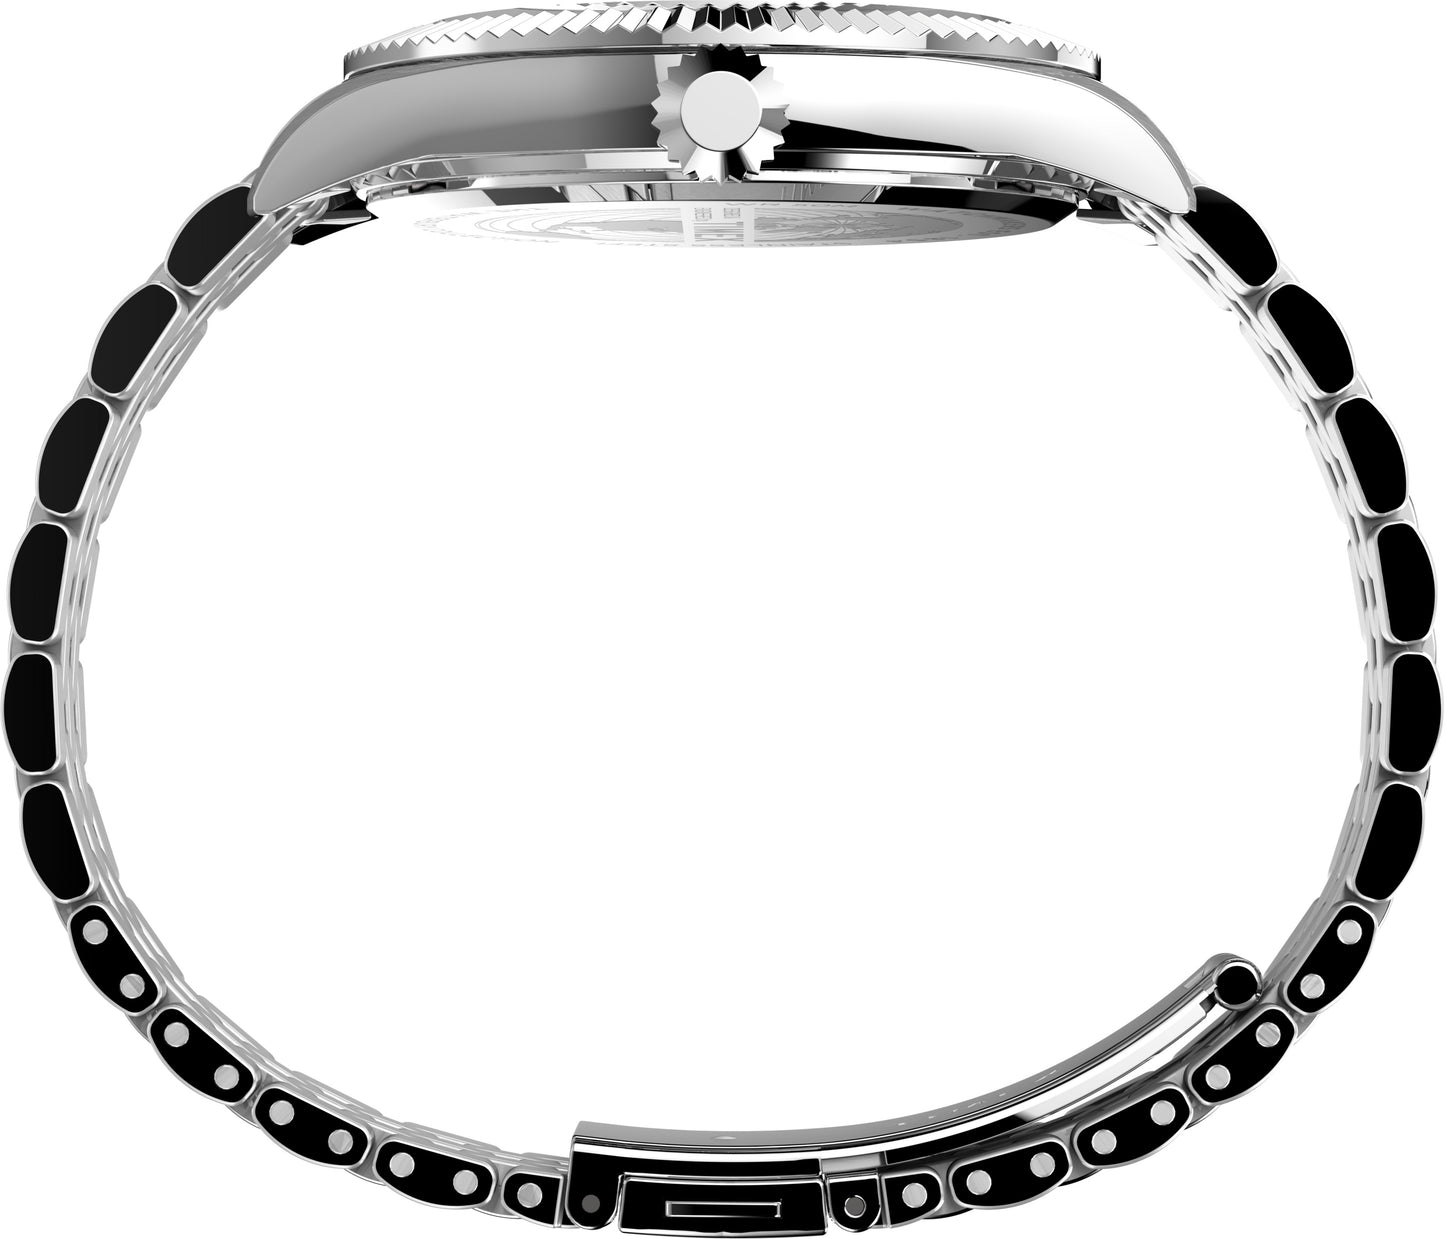 TIMEX Waterbury Legacy 41mm Stainless Steel Bracelet Watch TW2V18200